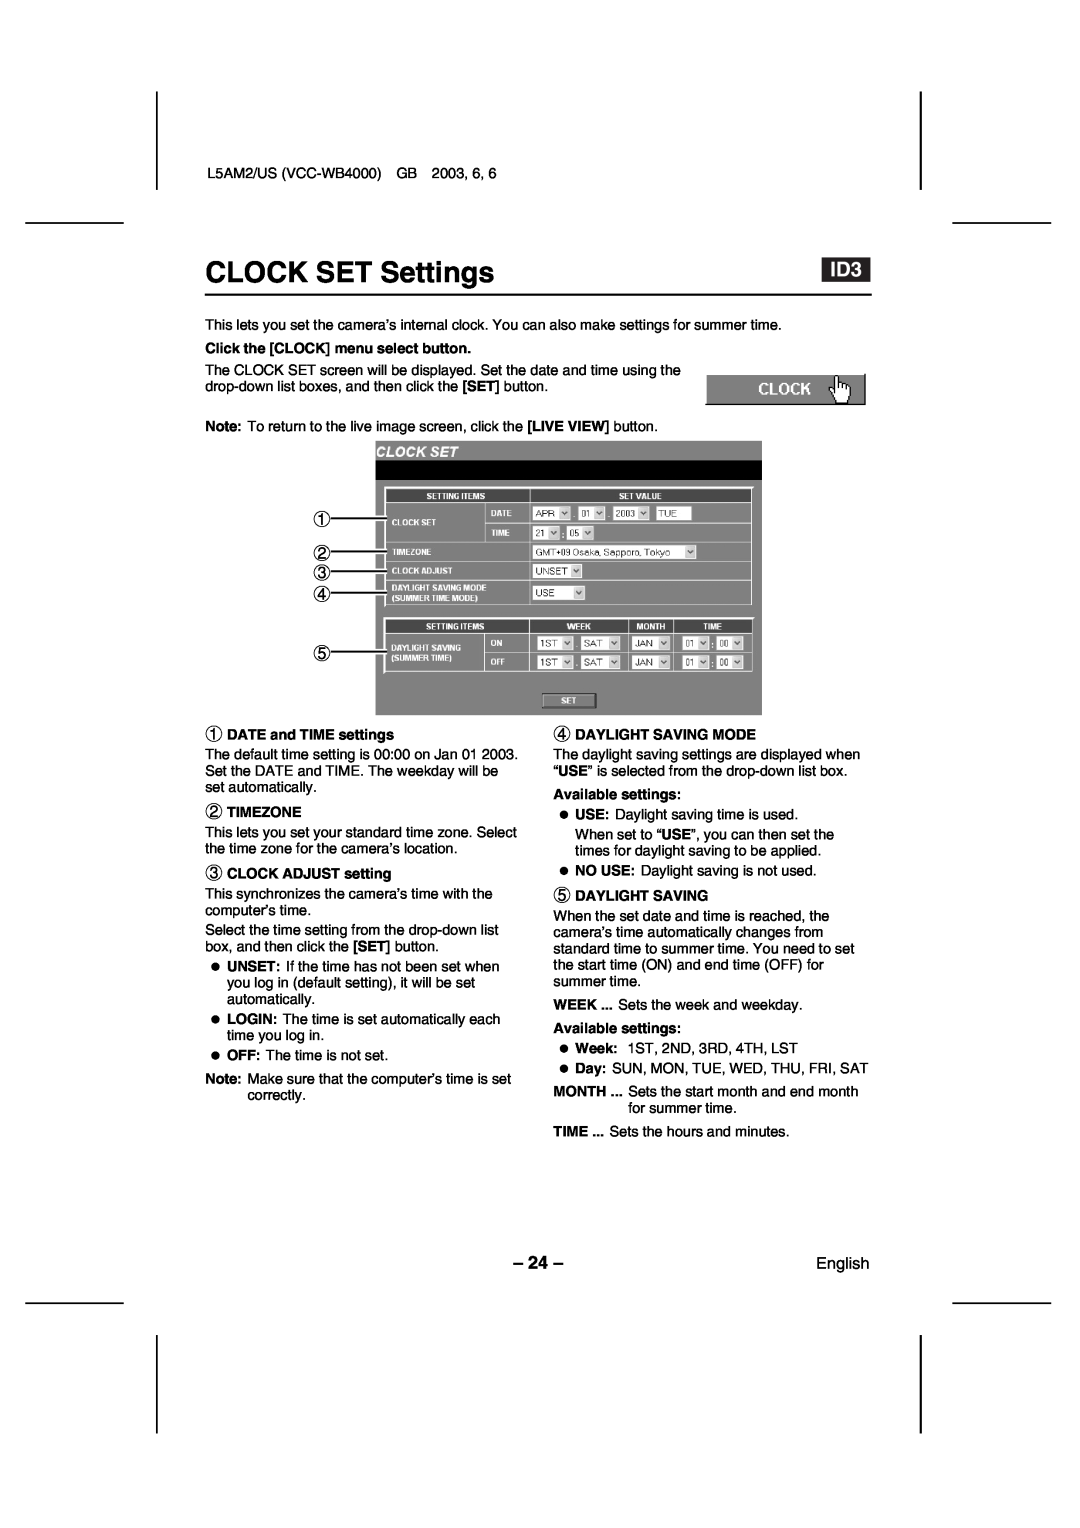 Sanyo VCC-WB4000 CLOCK SET Settings, Click the CLOCK menu select button, DATE and TIME settings, Timezone, Daylight Saving 